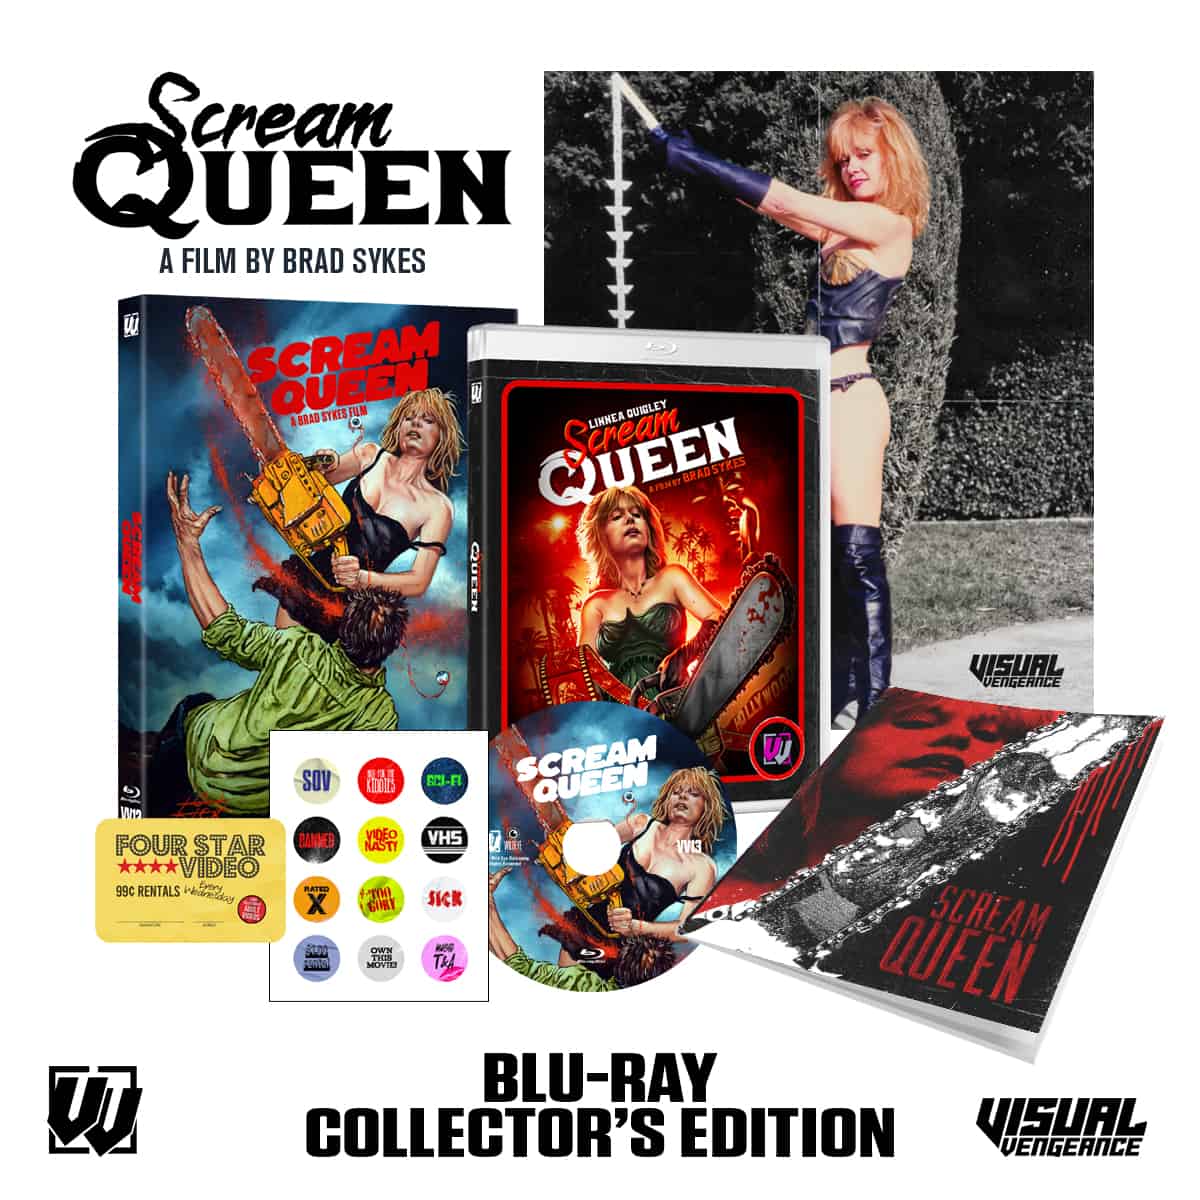 Lost Linnea Quigley Slasher Scream Queen Resurrected on Blu-ray by Visual Vengeance 1